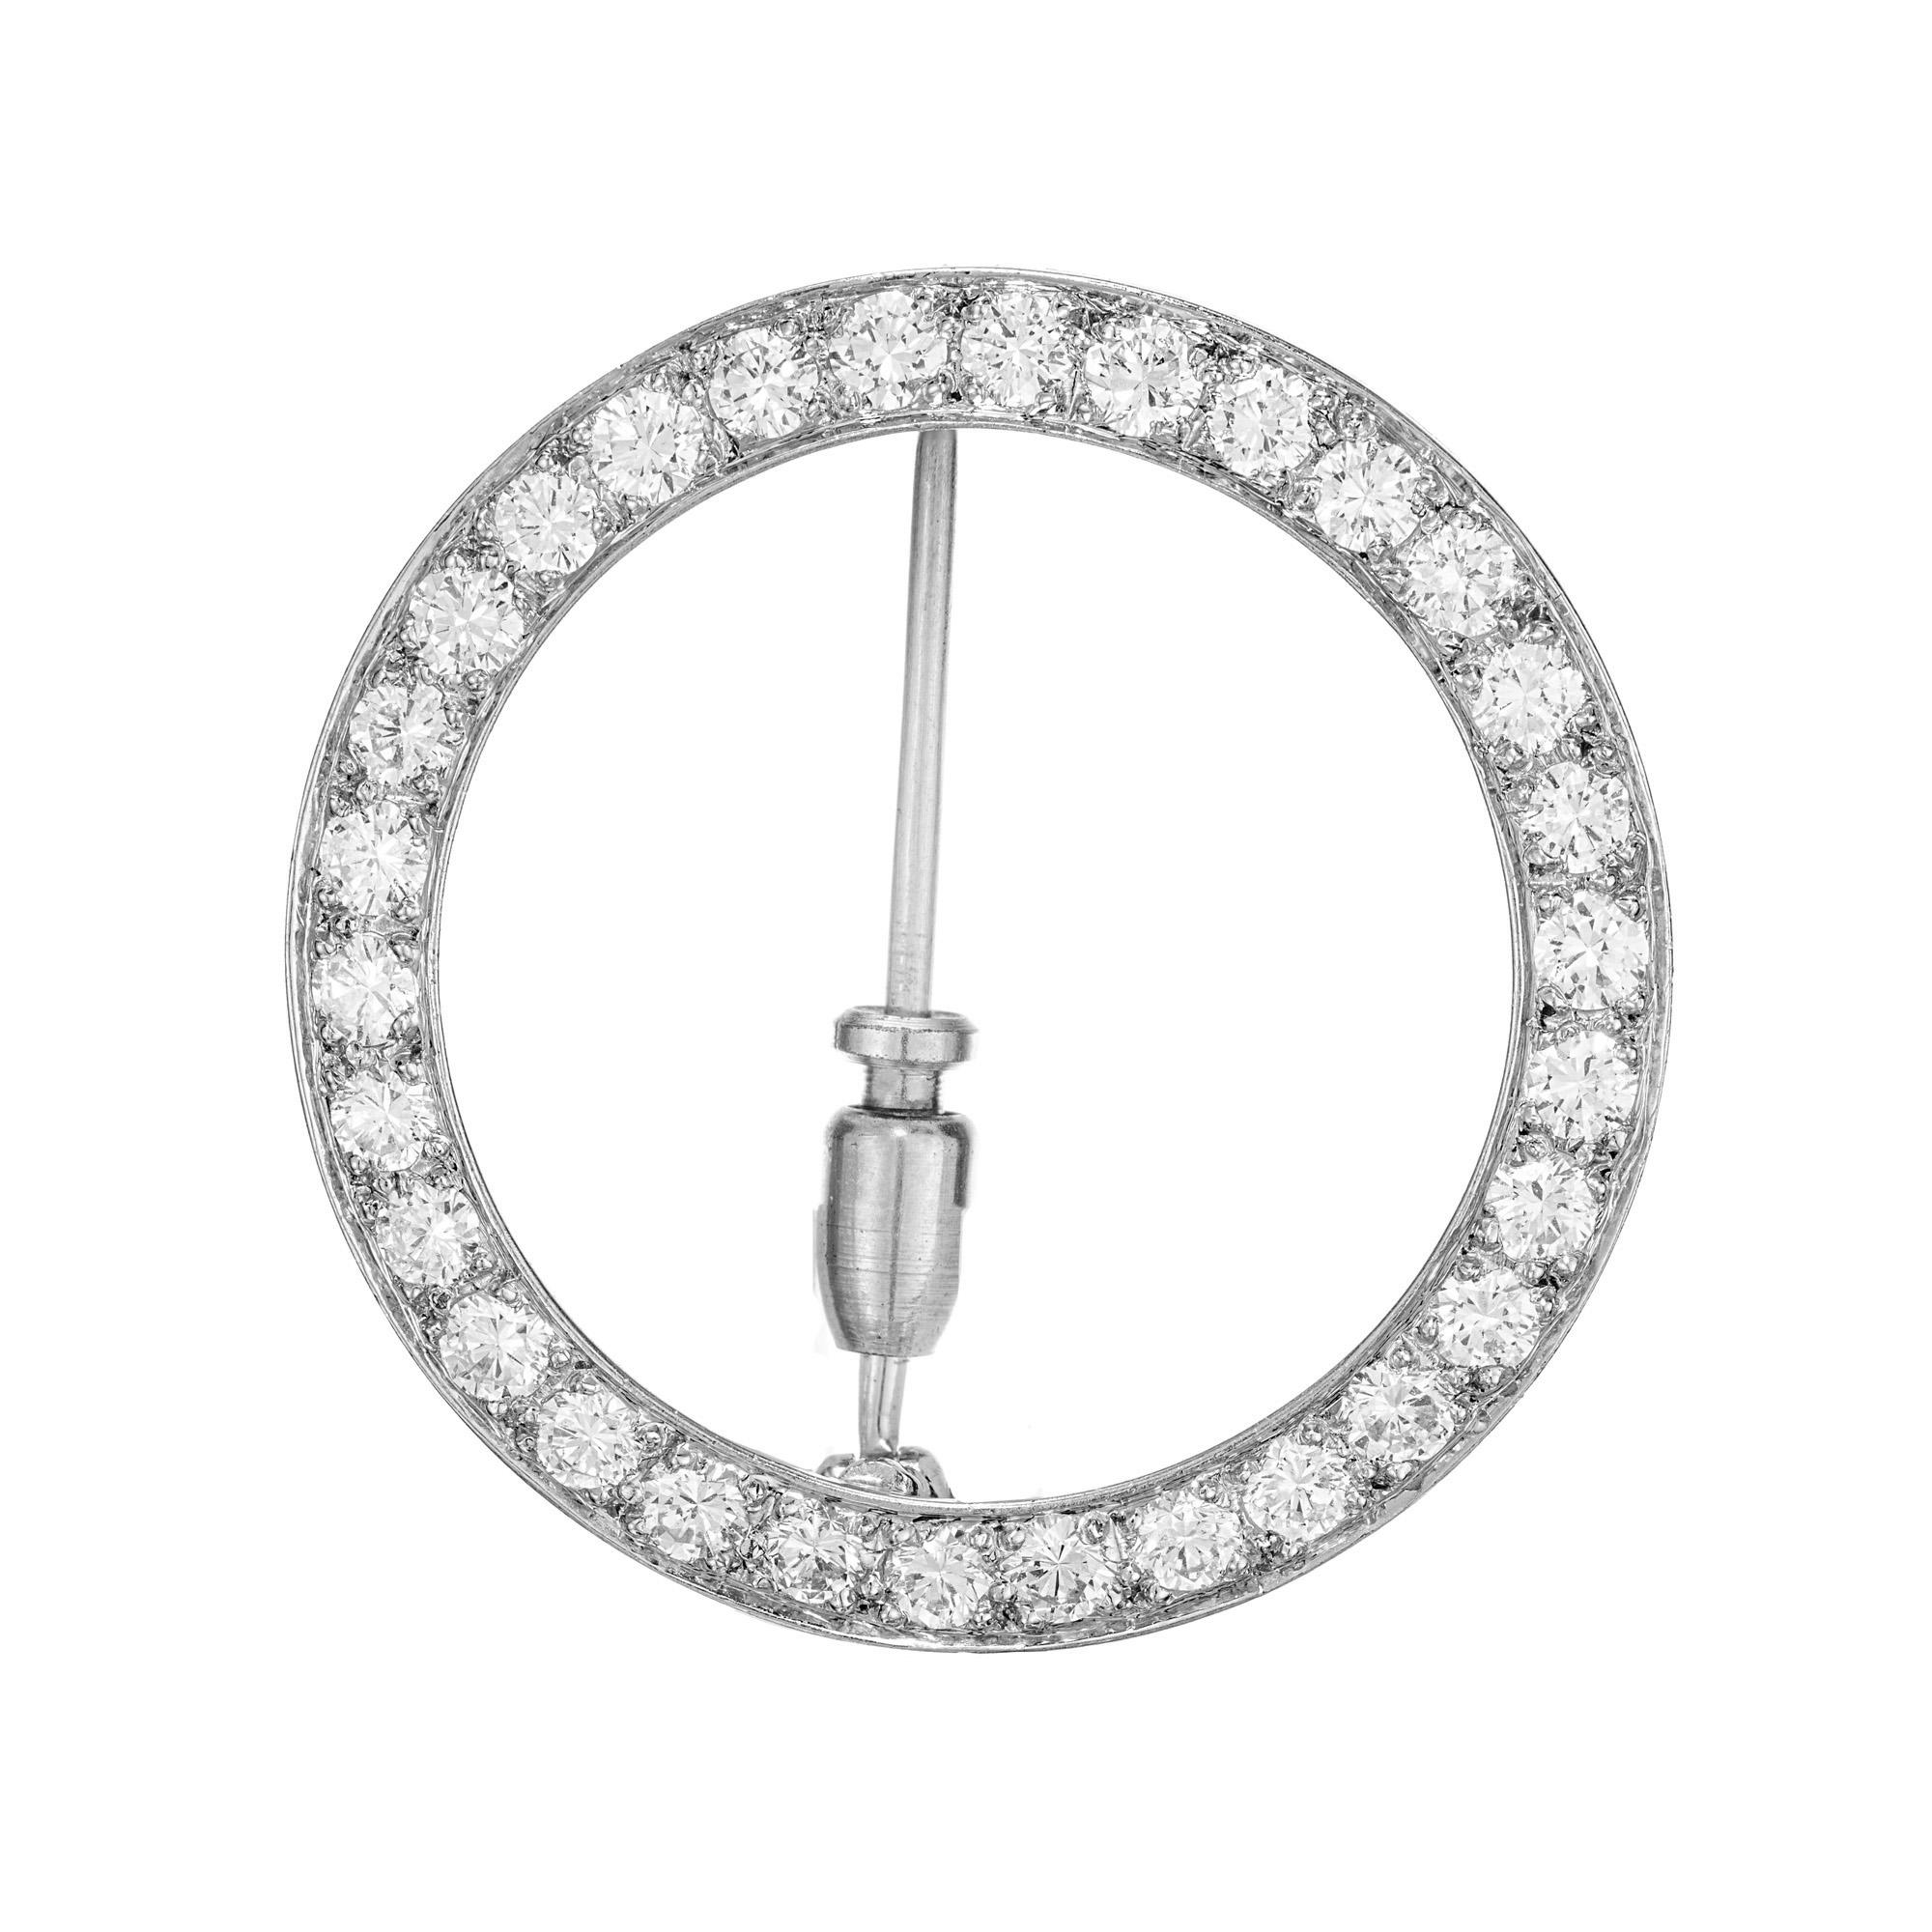 Vintage 1950's J.E. Caldwell of Philadelphia diamond brooch. 30 round brilliant cut diamonds in a circular platinum setting. 

30 round brilliant cut diamonds, G-H VS approx. 1.20cts
Platinum
Hallmark: JEC
5.2 grams
Top to bottom: 28.5mm or 1.12